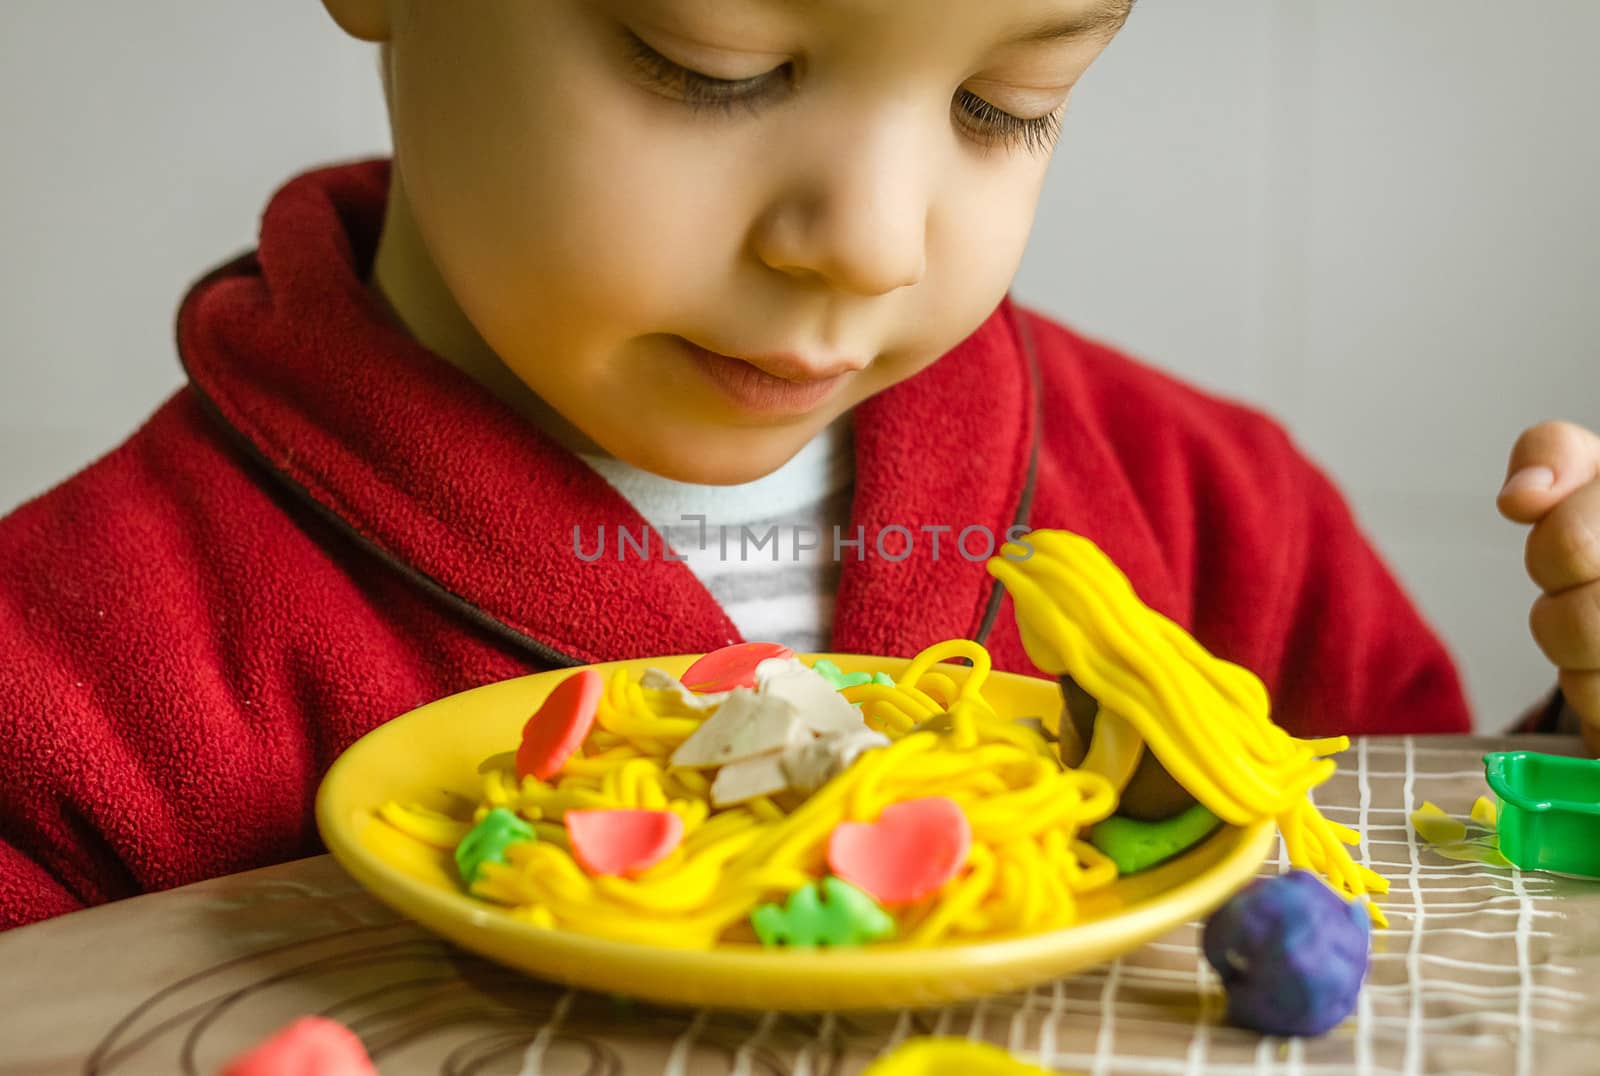 Cute child looking his original spaghetti dish, made with colorful plasticine